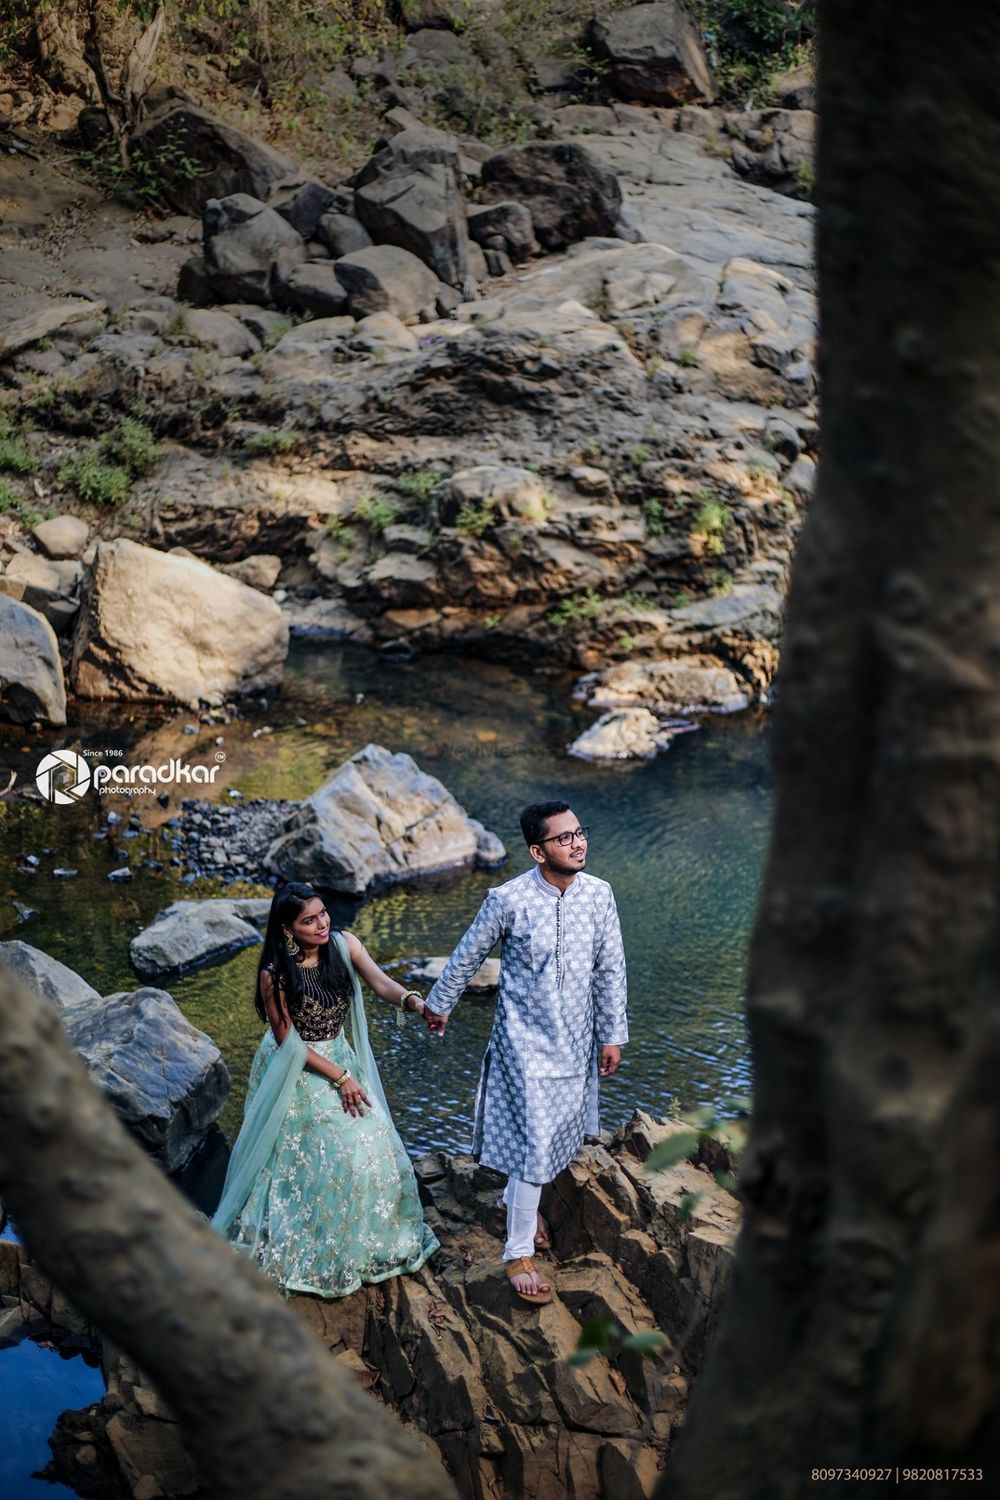 Photo From Mandar + Shubhangi Pre - wedding - By Paradkar Photography 